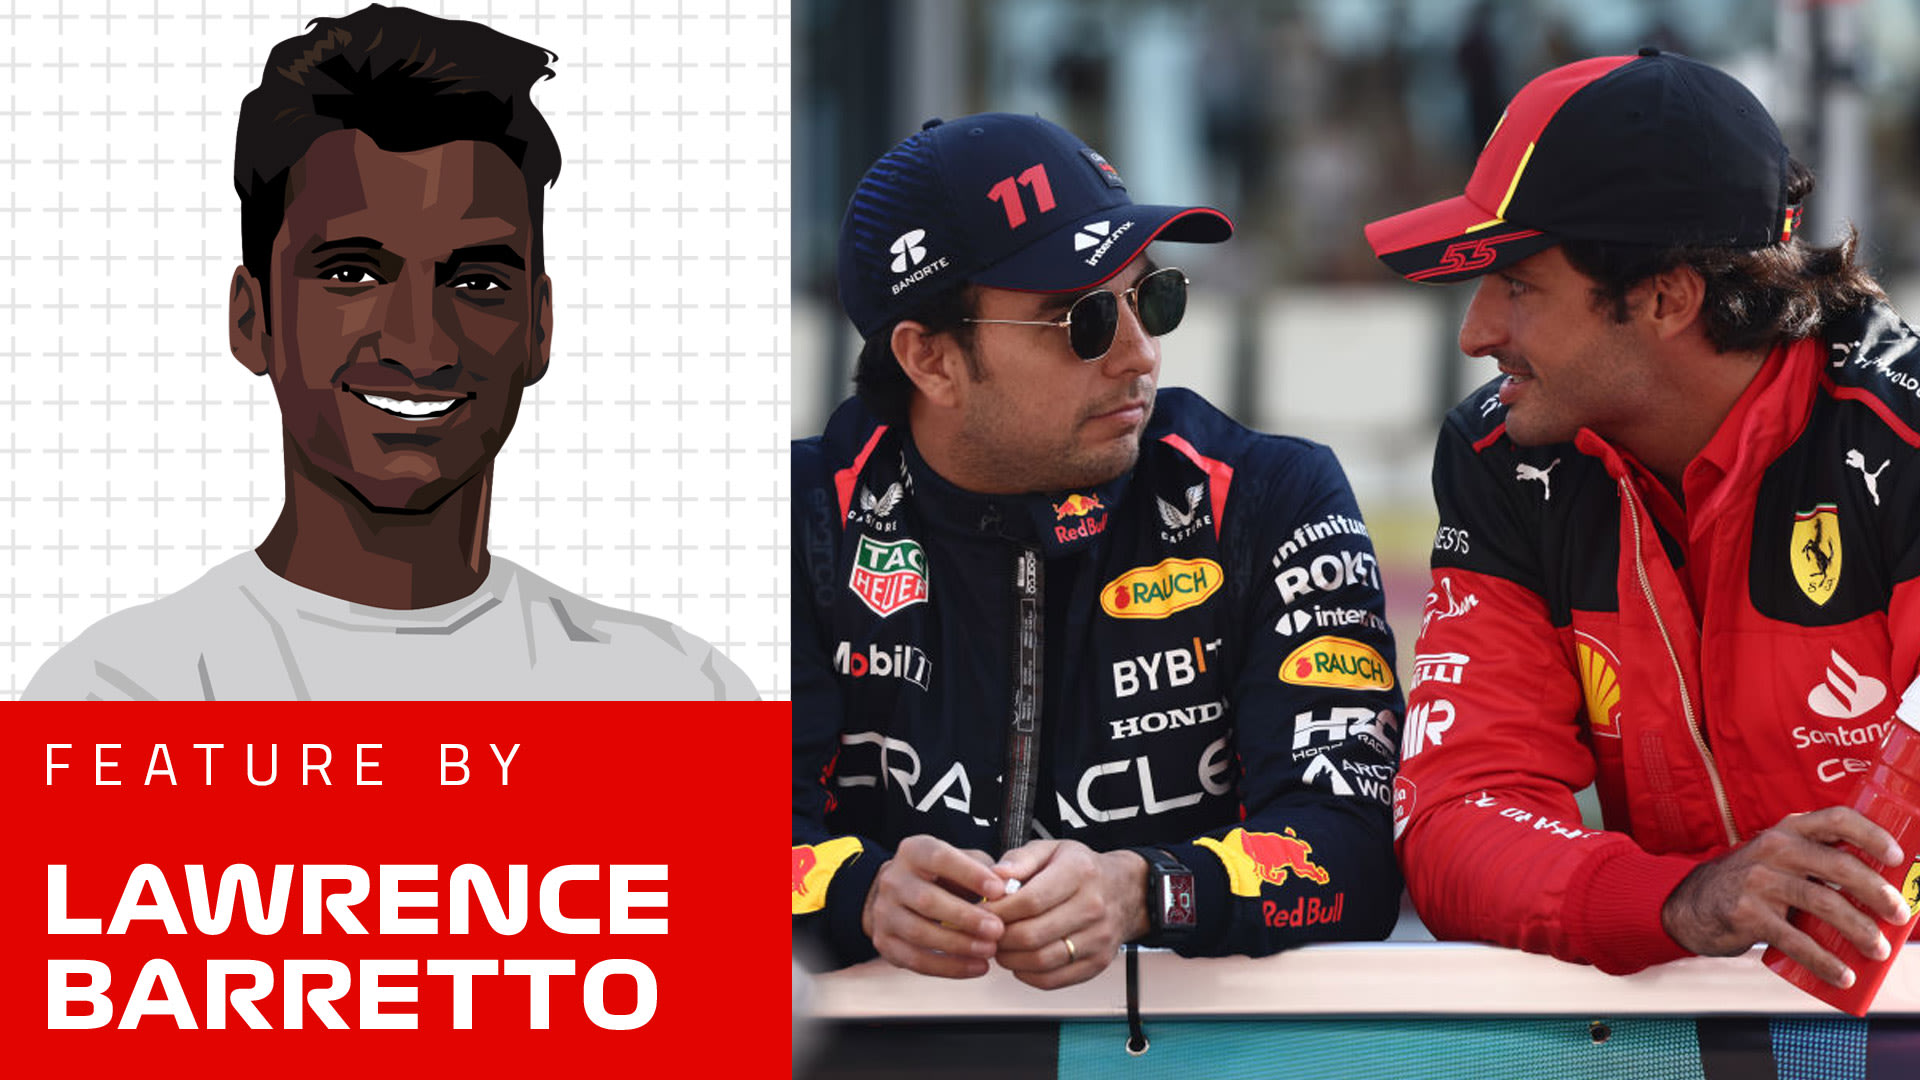 BARRETTO: Perez? Ricciardo? Sainz? Who will get the nod to partner Verstappen at Red Bull next season?